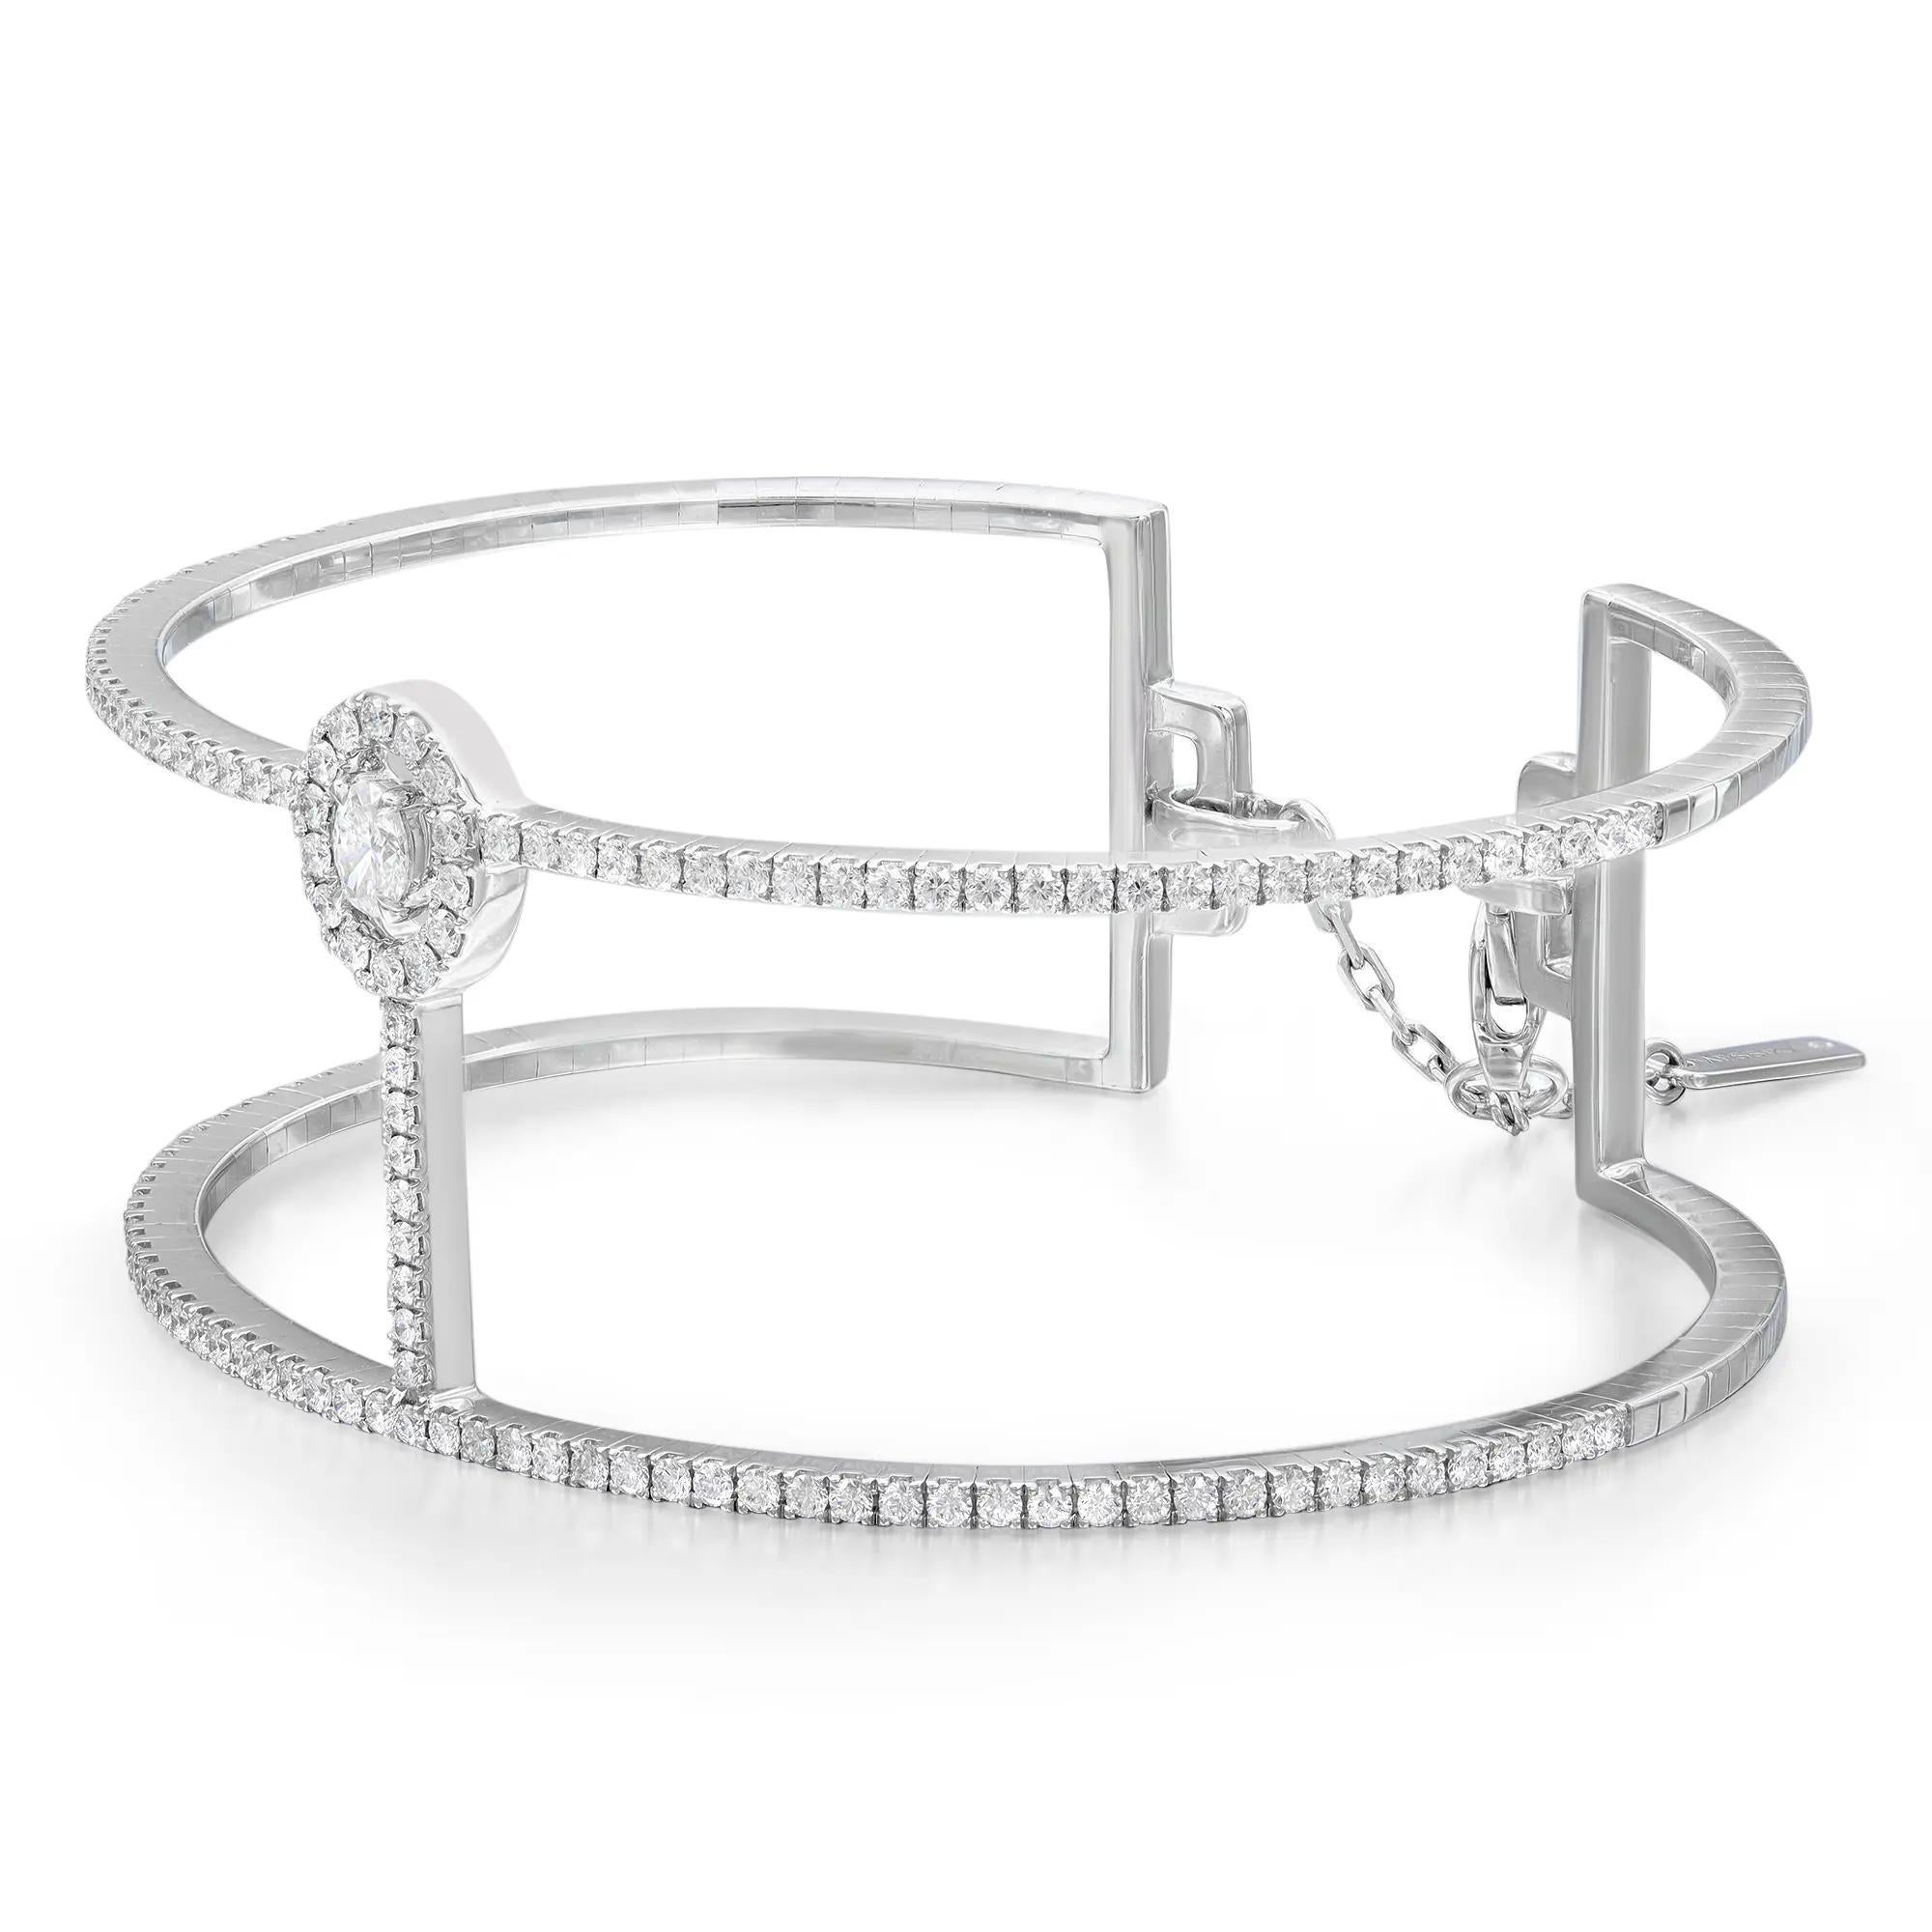 Oval Cut Messika Manch Glam'Azone Diamond 2 Row Bracelet 18K White Gold 1.53Cttw SZ Small For Sale